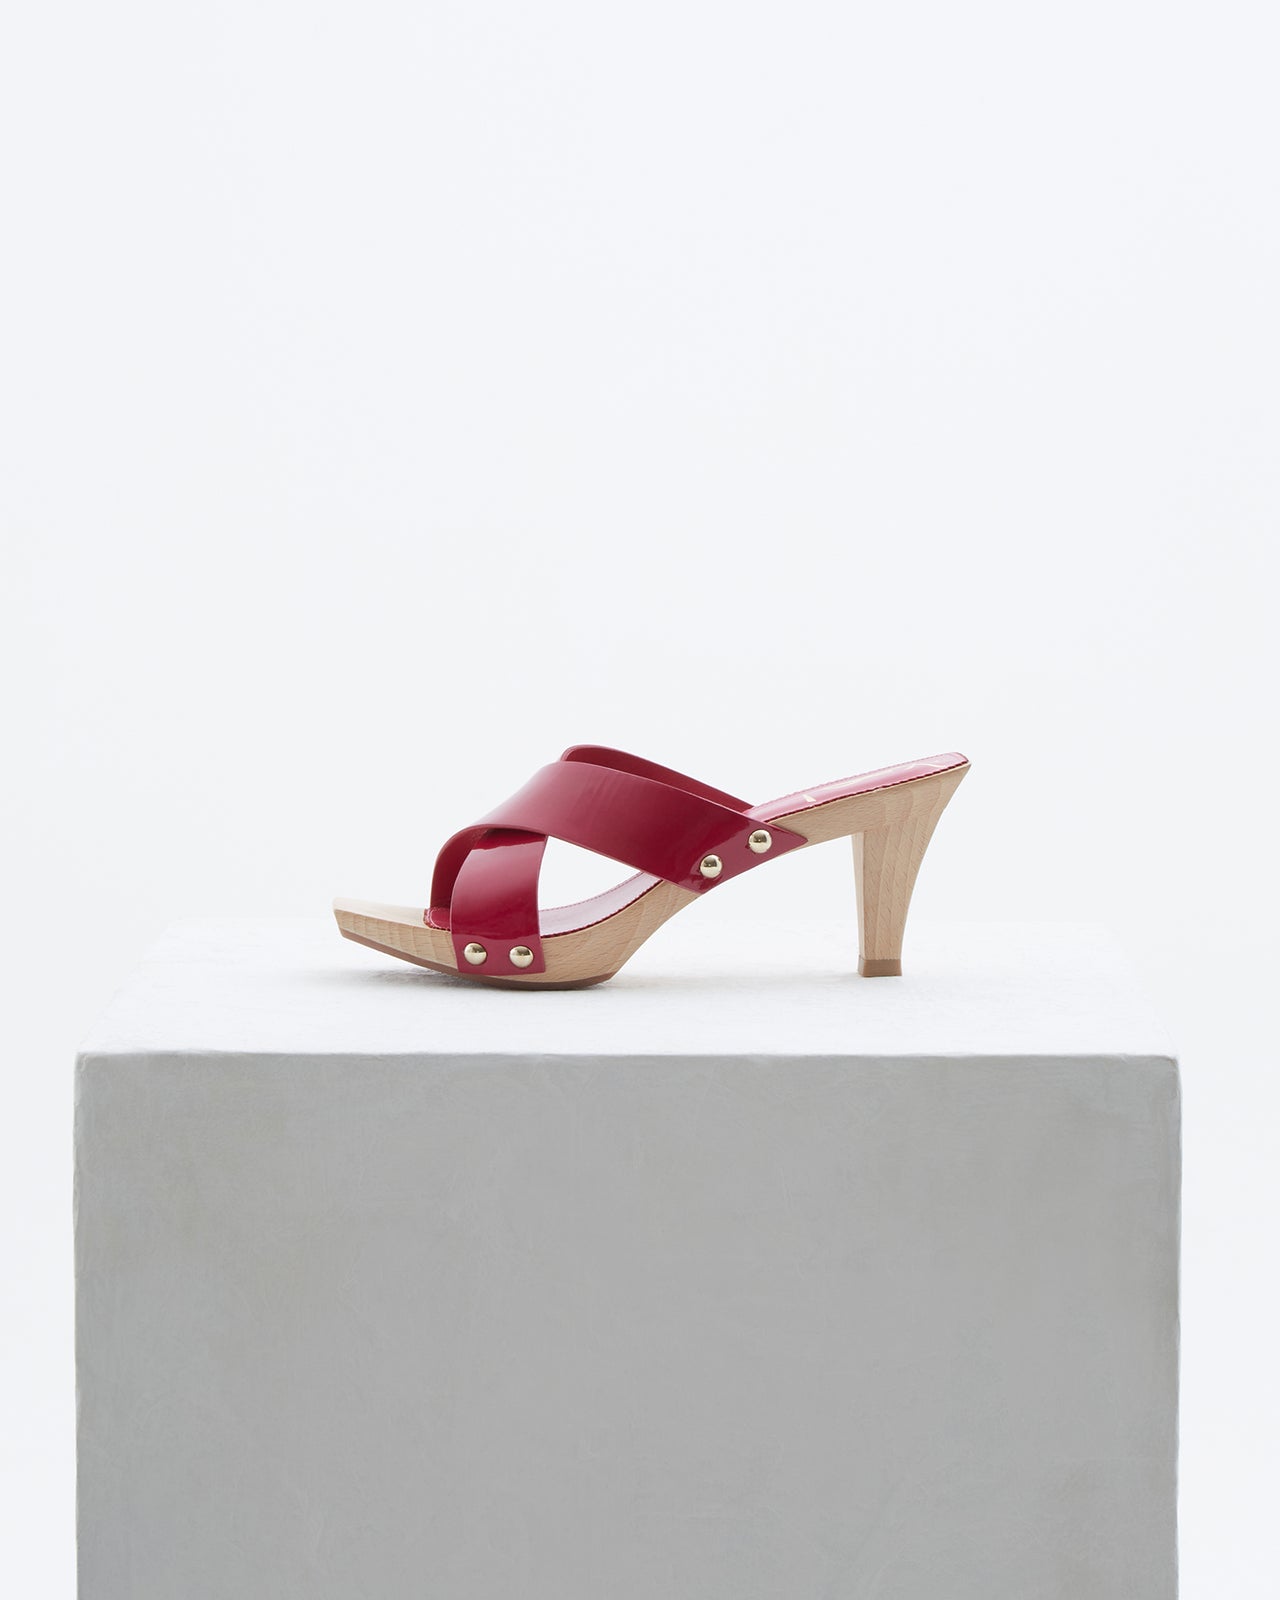 Yves Saint Laurent  Lolita wooden fuchsia patent leather criss cross toe heels